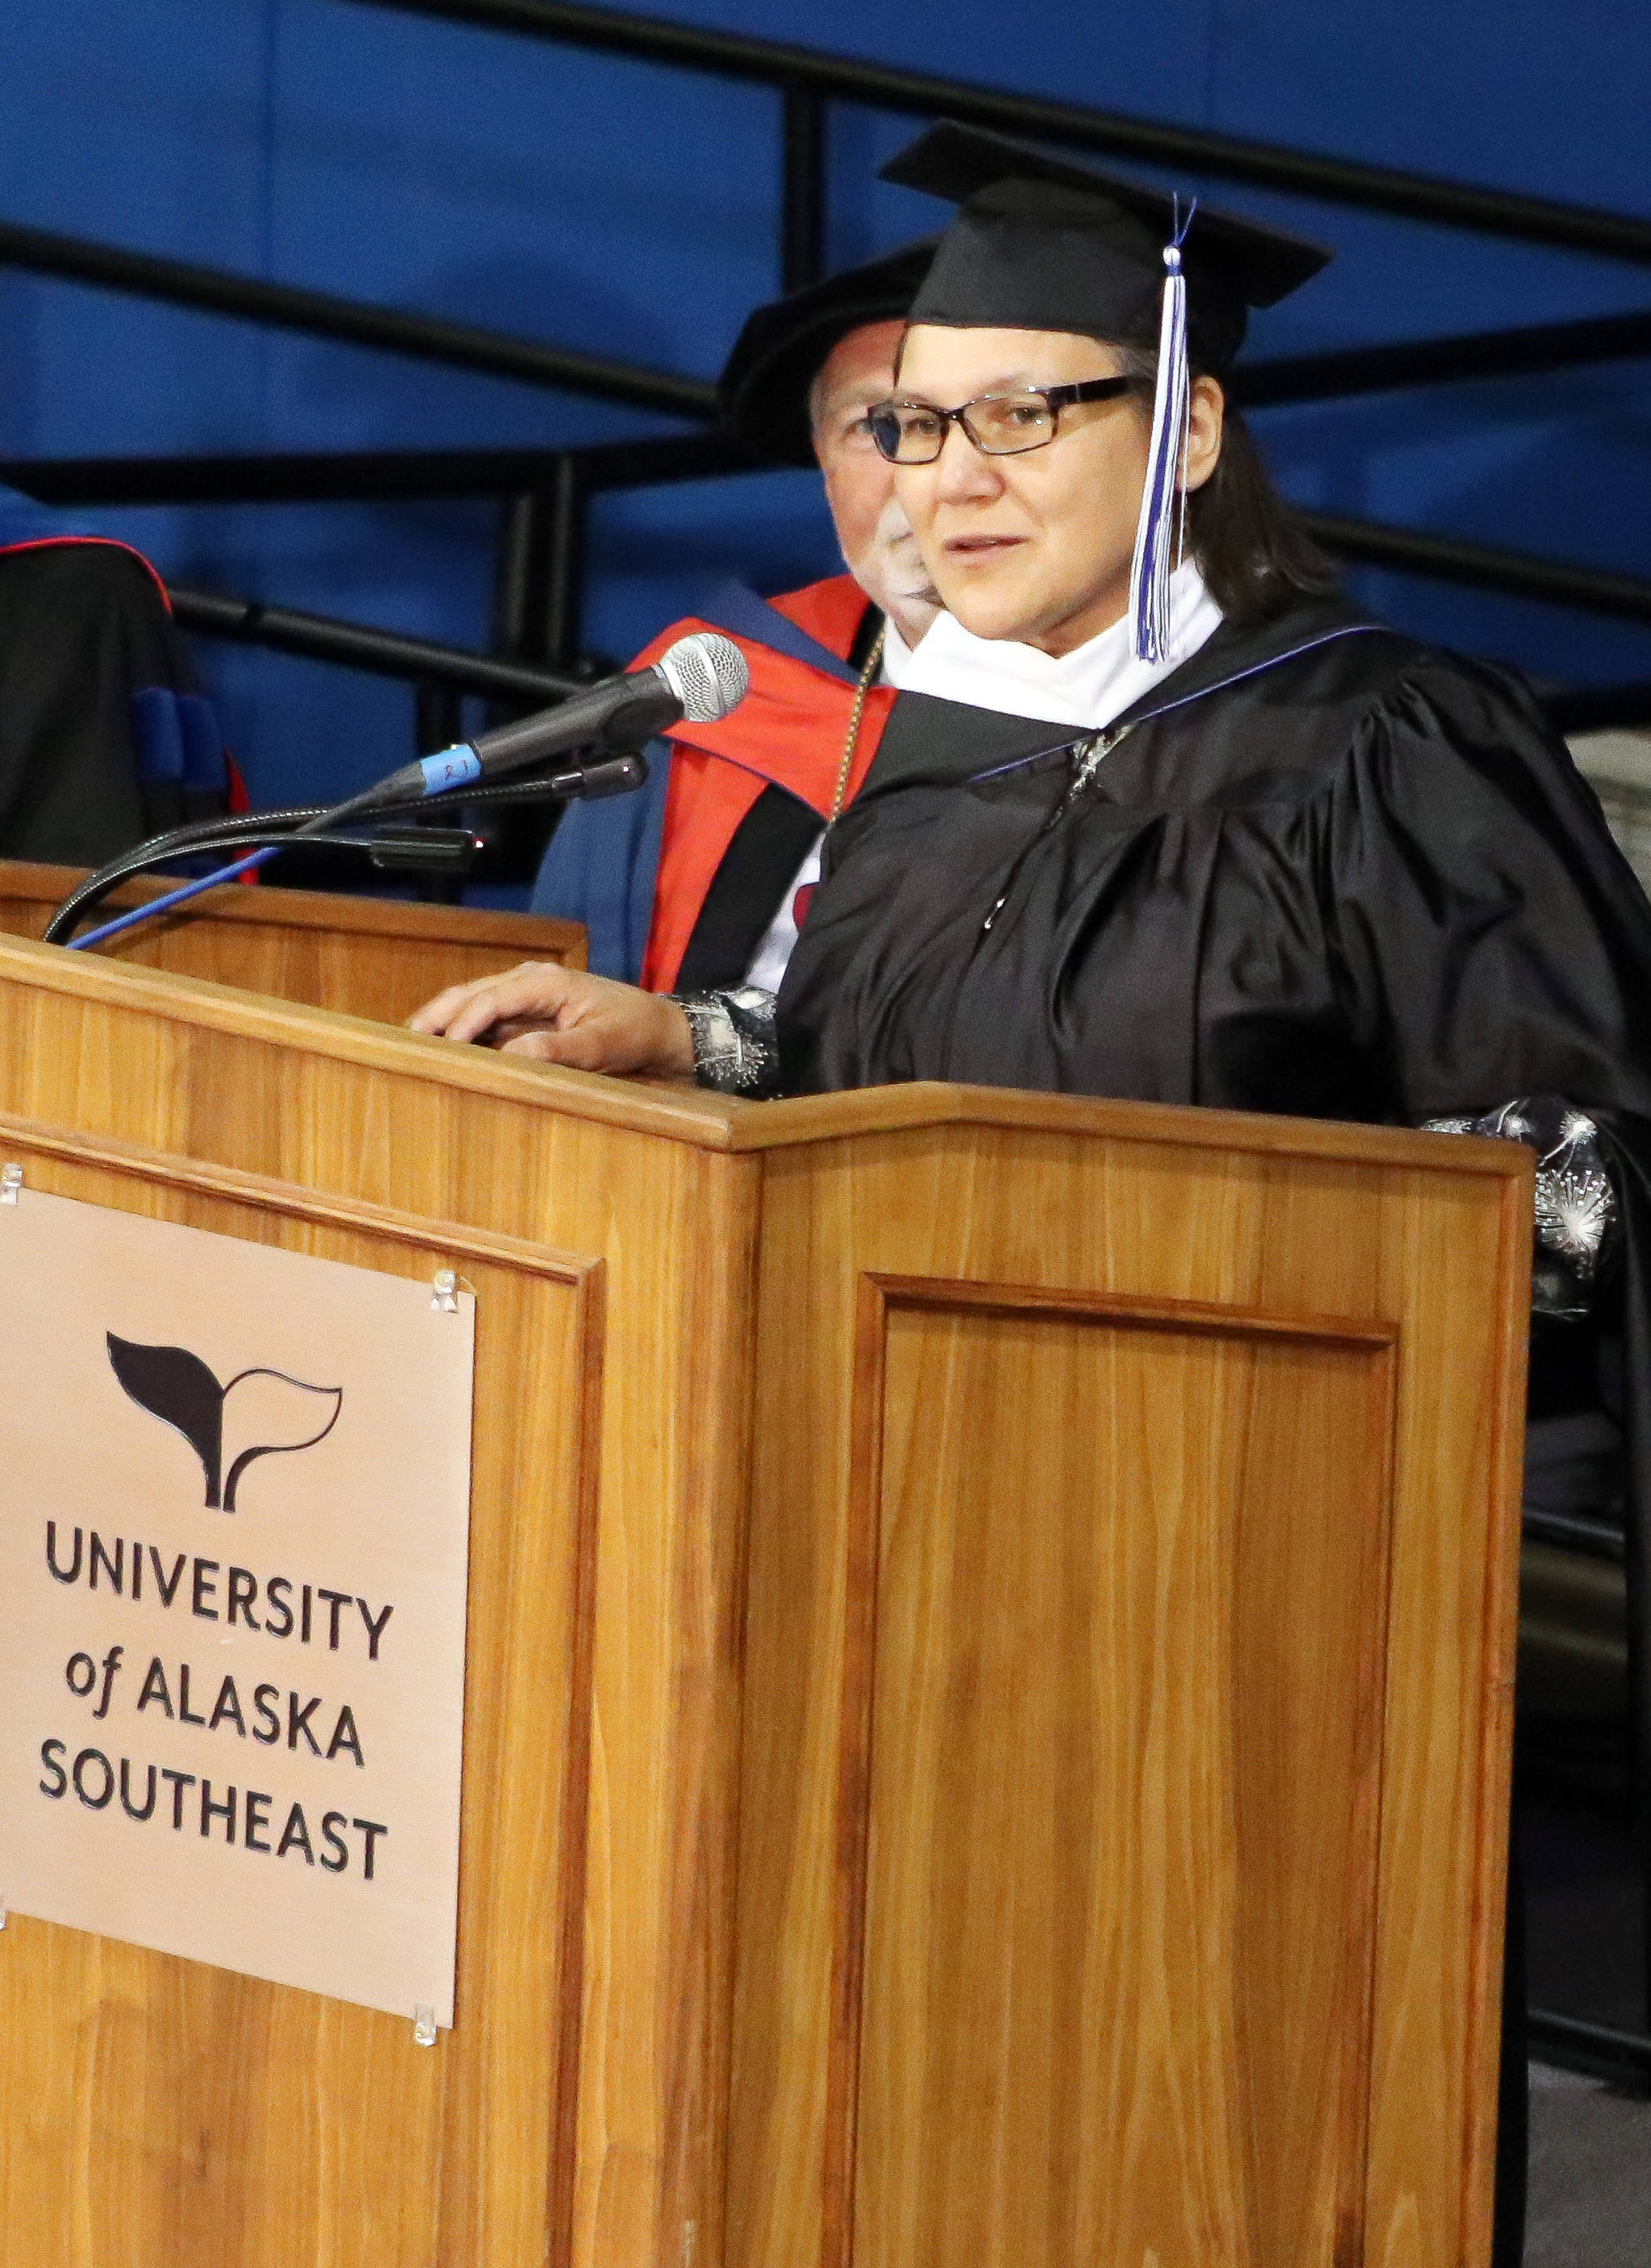 Commencement speaker Valerie Nurr’araaluk Davidson speaks during the University of Alaska Southeast commencement ceremony on Sunday, May 5, 2019. (Erin Laughlin | For the Juneau Empire)